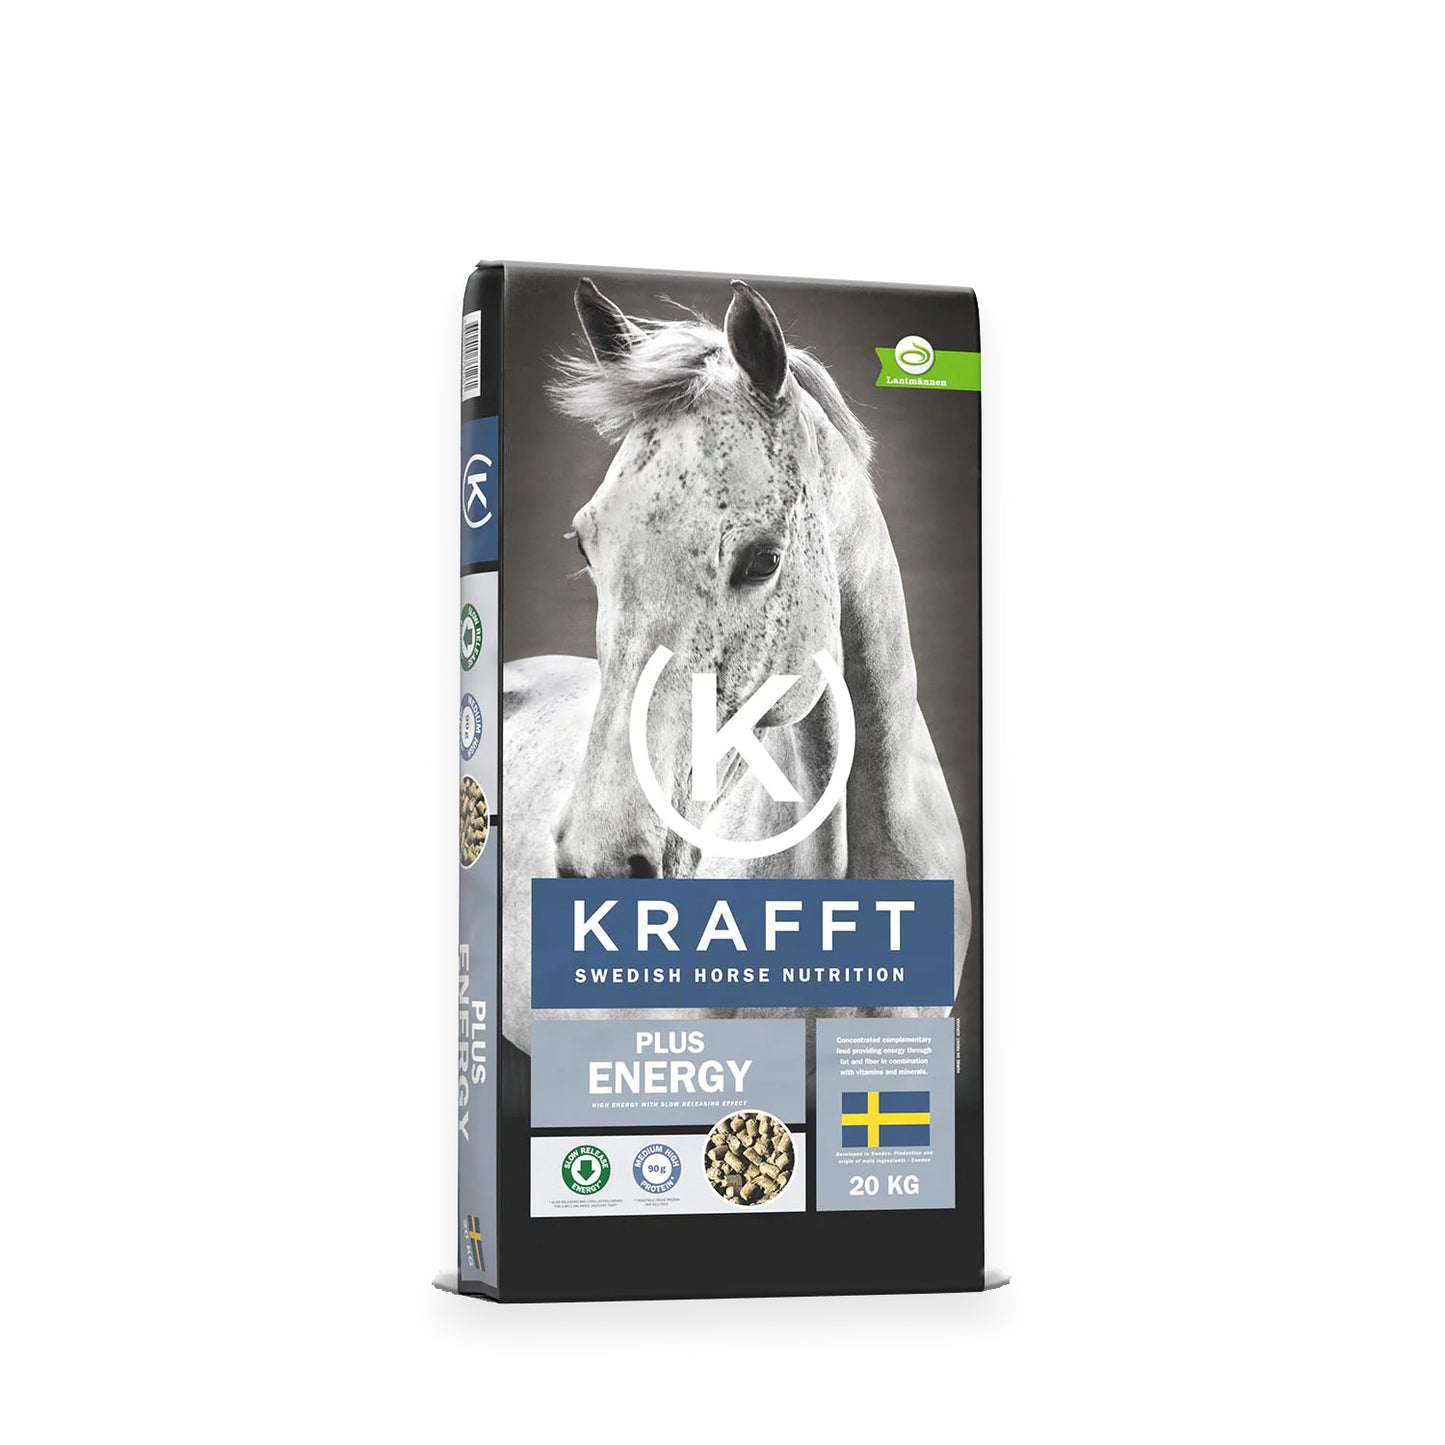 Krafft Plus Energy 20kg